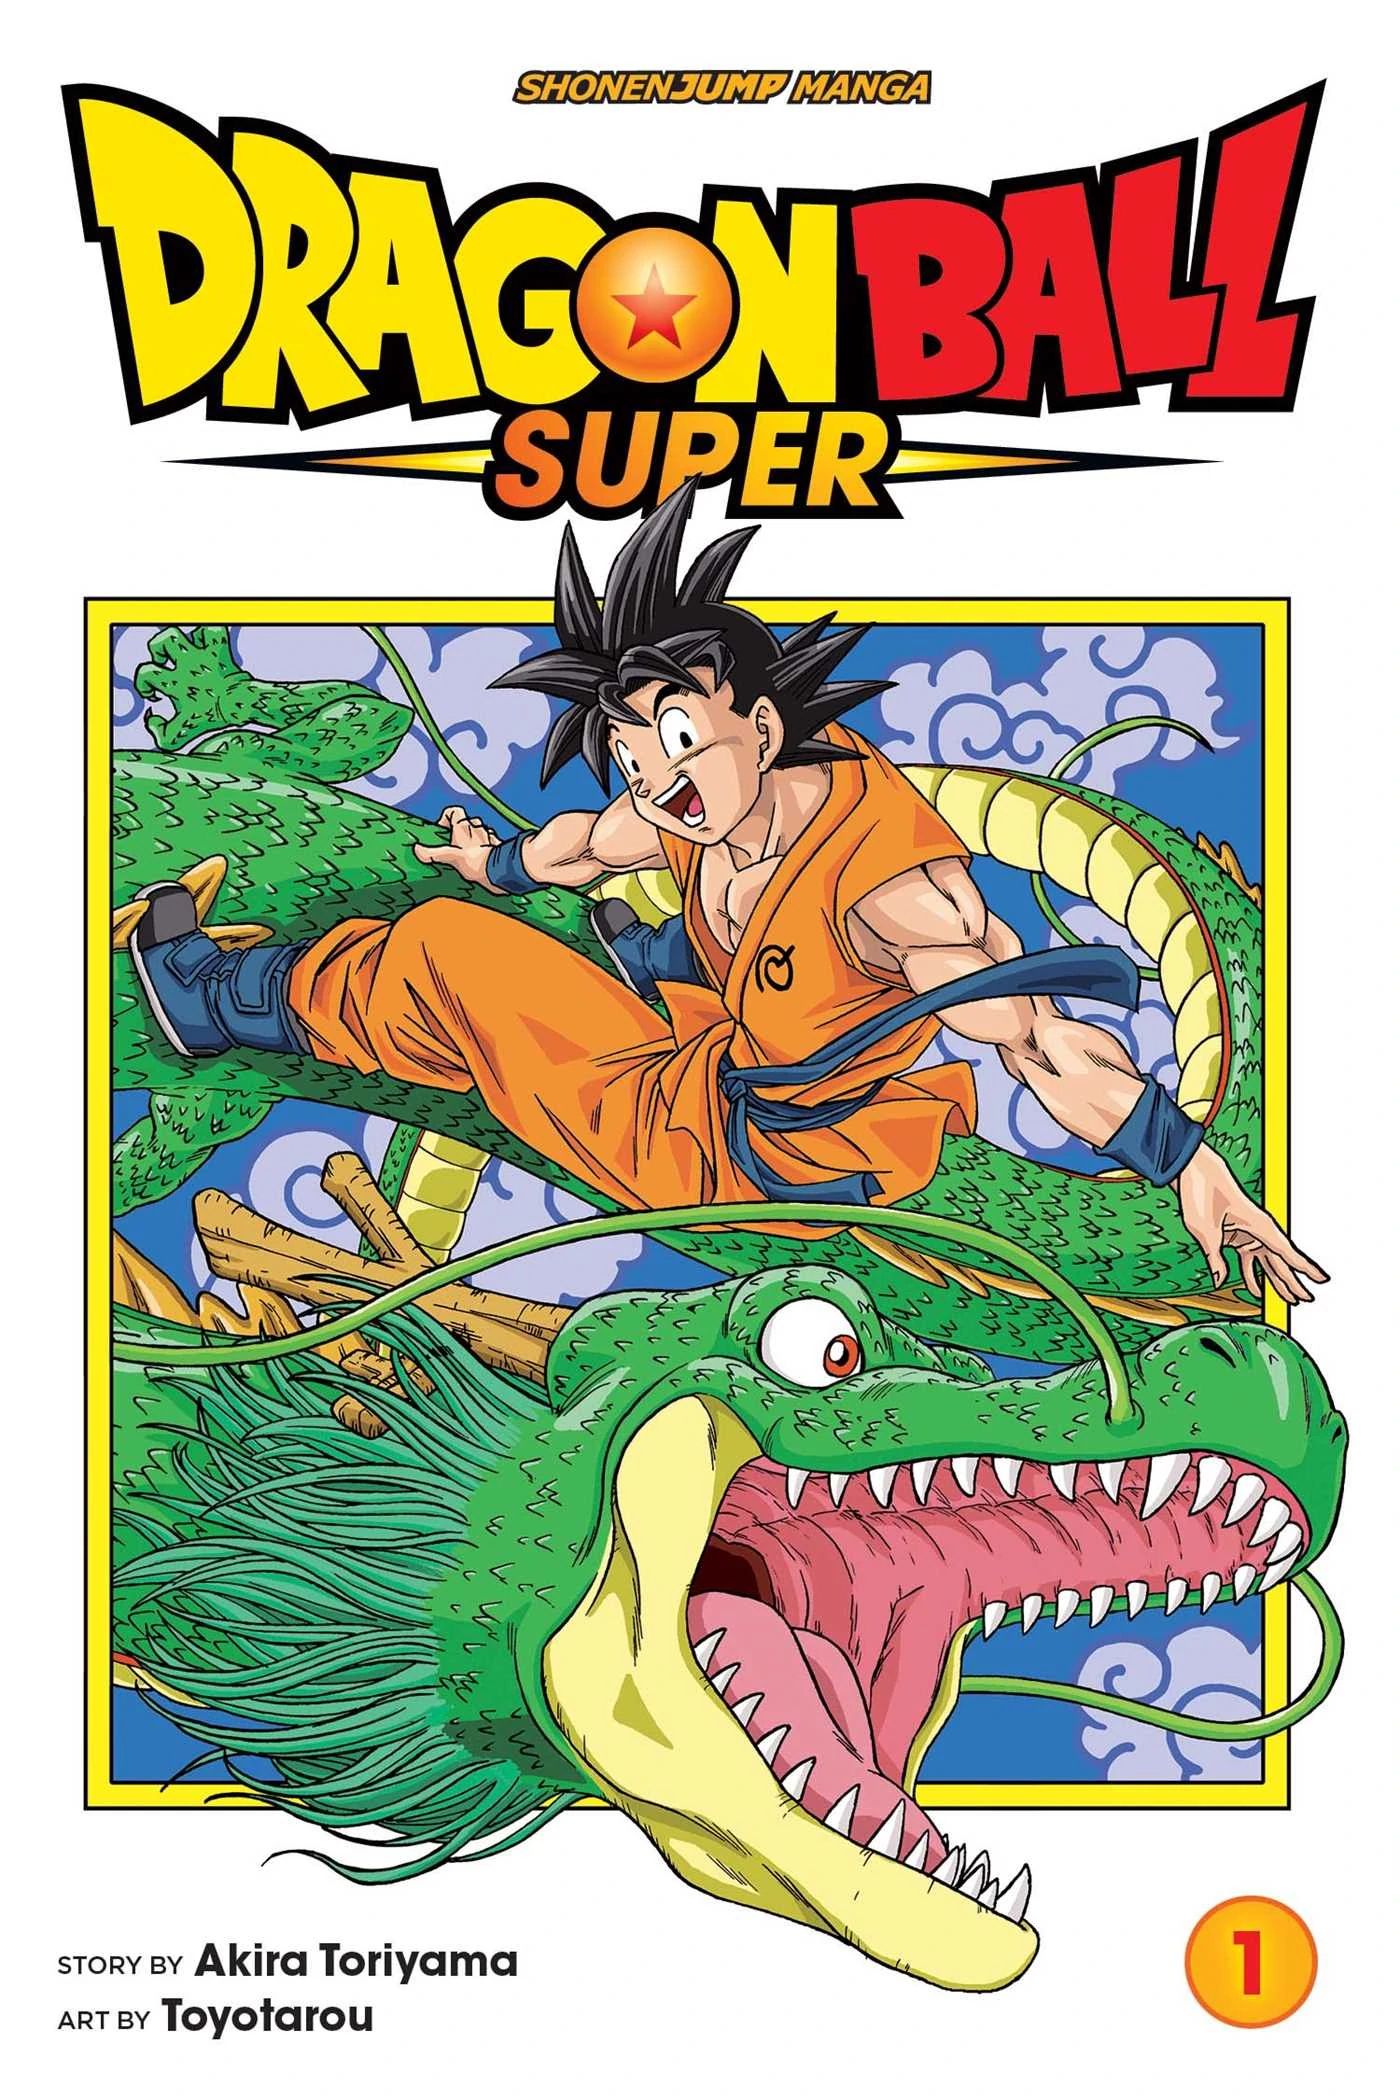 A Dragon Ball Fan-Comic Was So Good, its Creator Became Super’s Artist